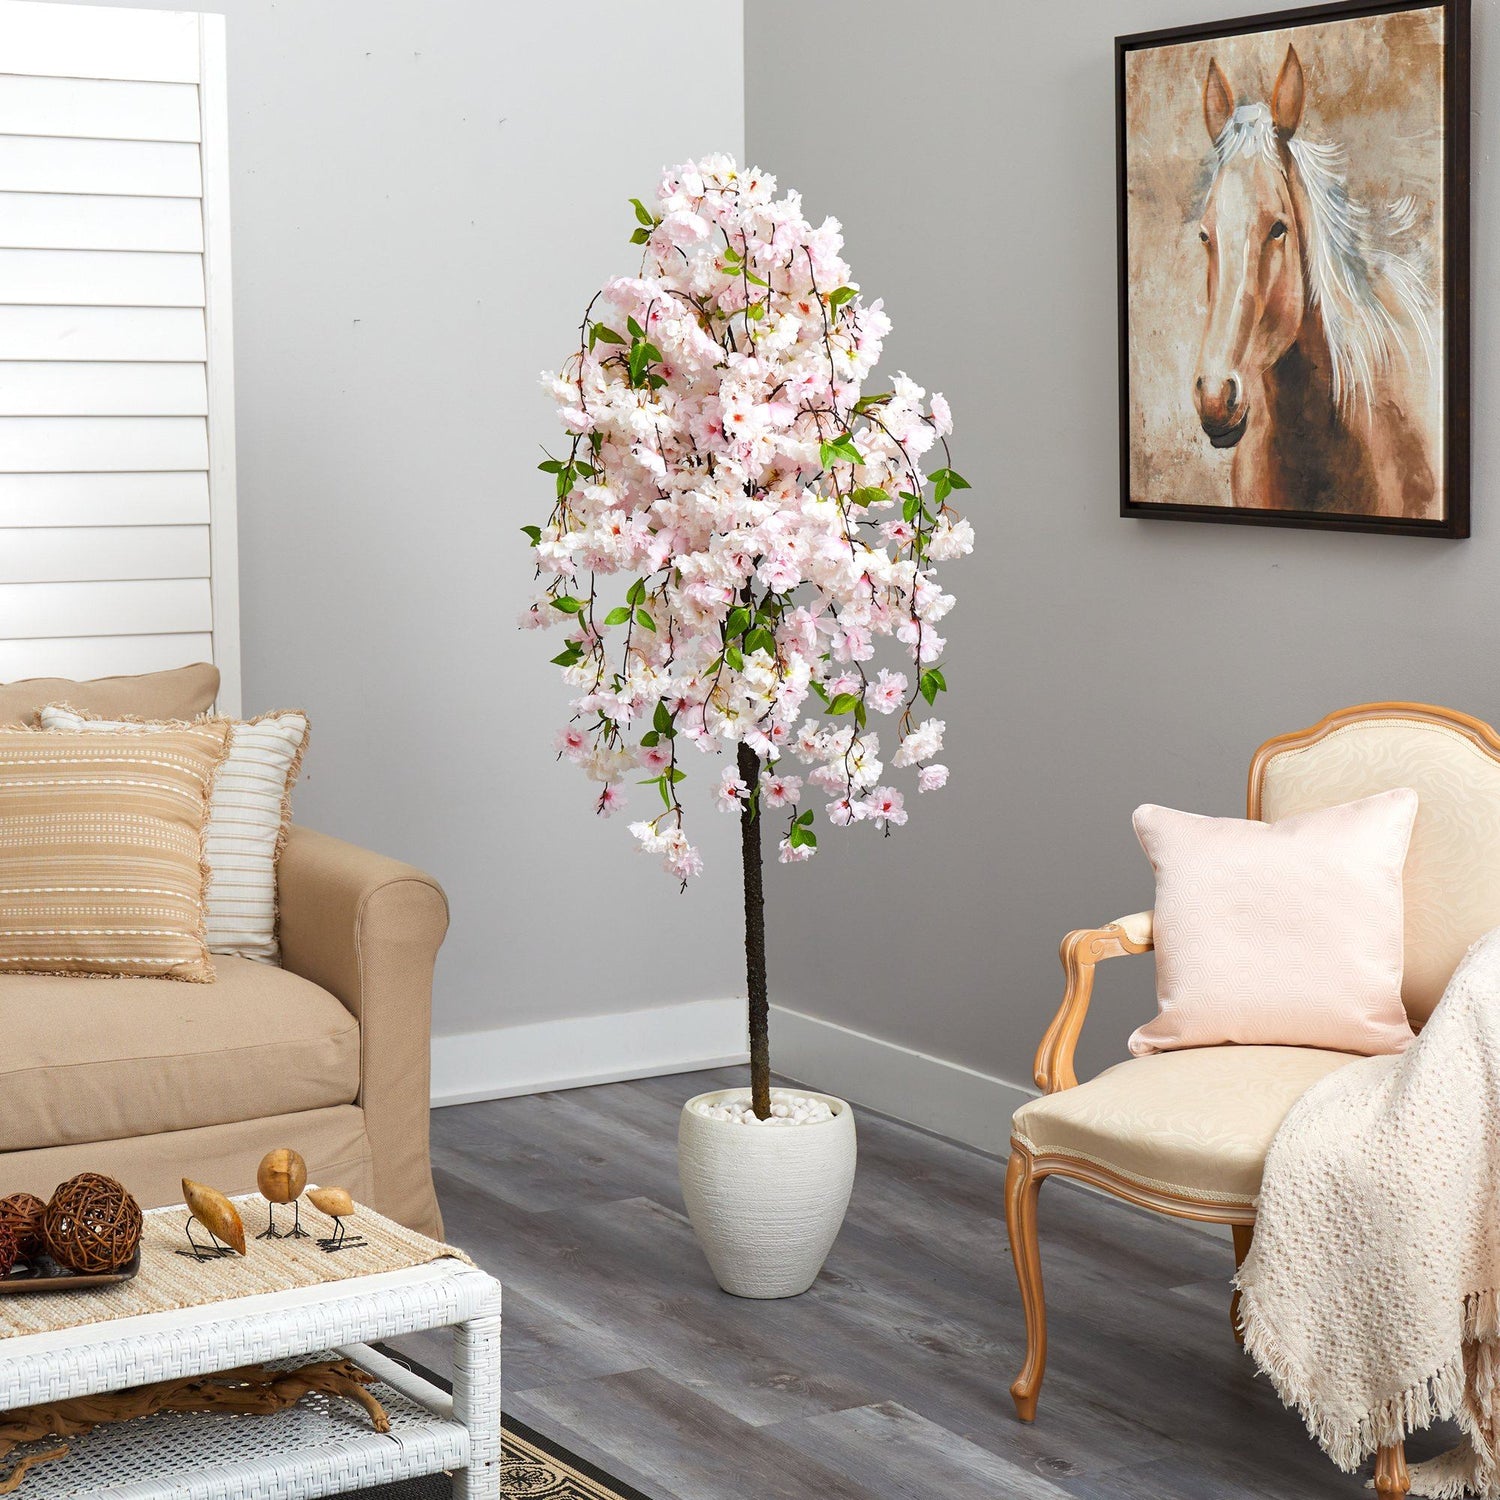 70” Cherry Blossom Artificial Tree in White Planter